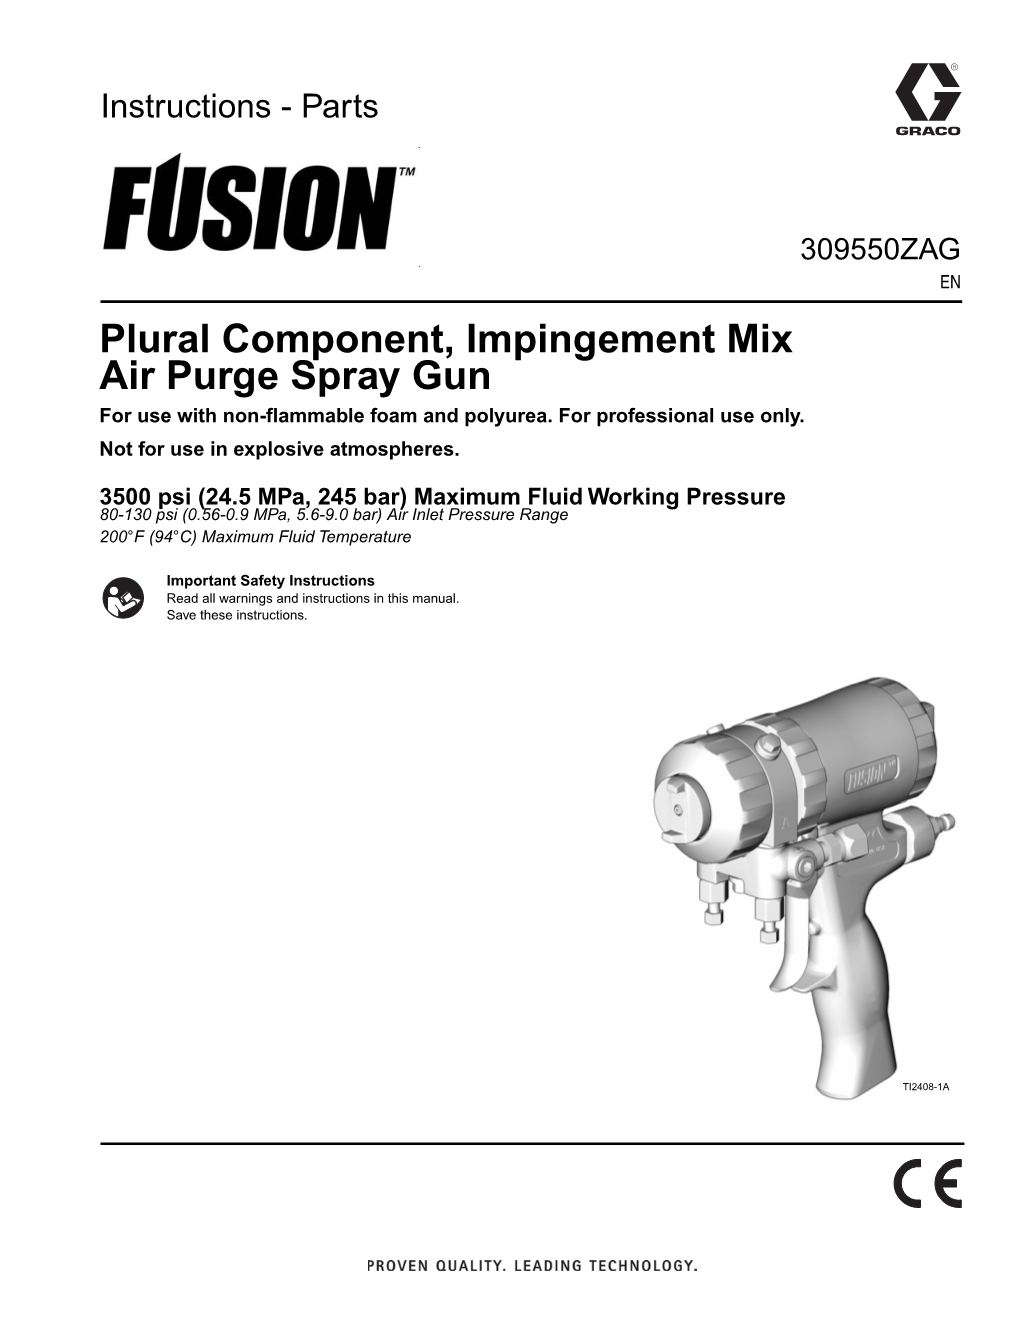 Fusion Plural Component, Impingement Mix, Air Purge Spray Gun, Instructions-Parts, English